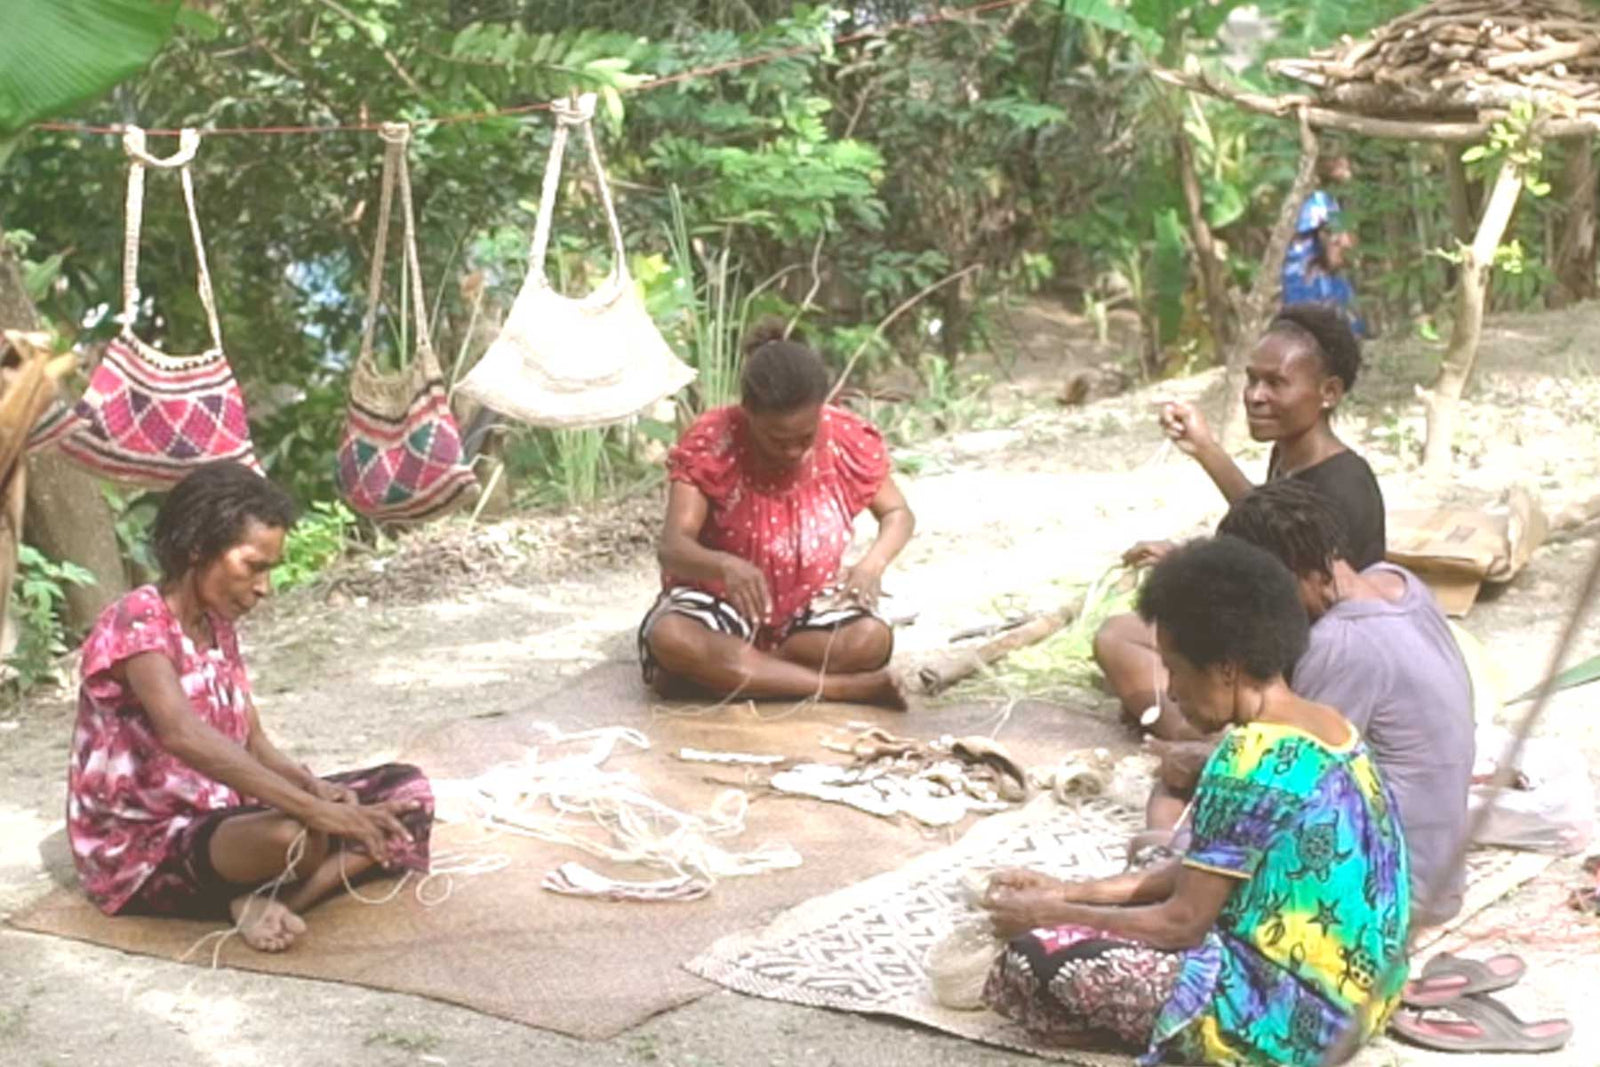 Bilum and Bilas artisans weaving bilums together in a circle